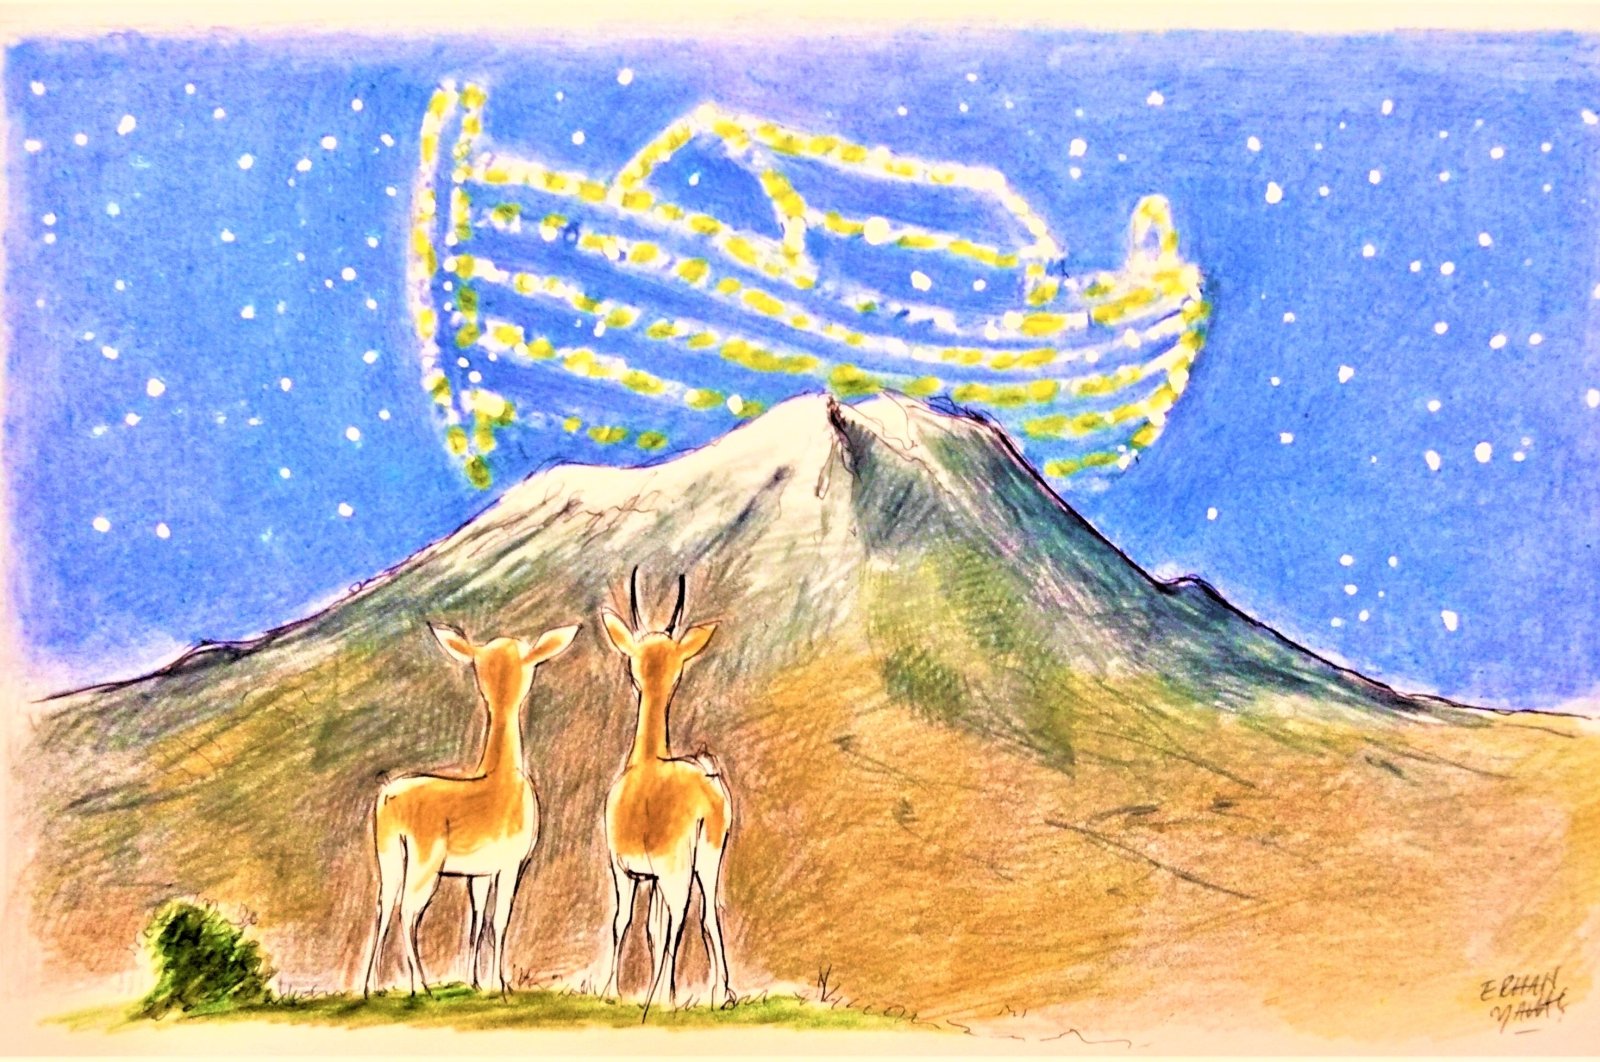 Noah and the Mount Ararat illustration